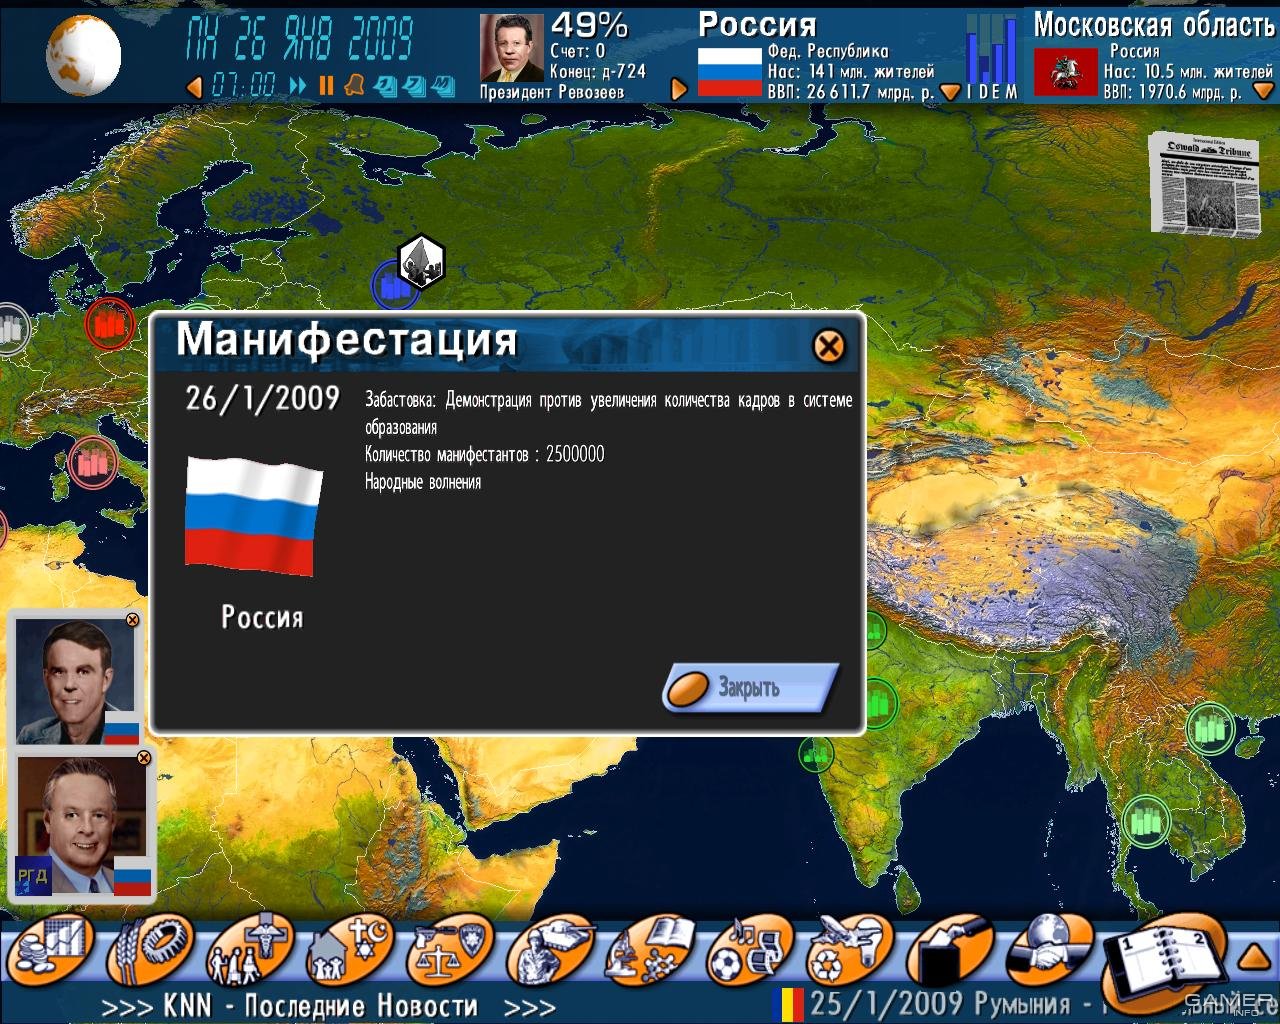 geopolitical simulator 4 2020 download free